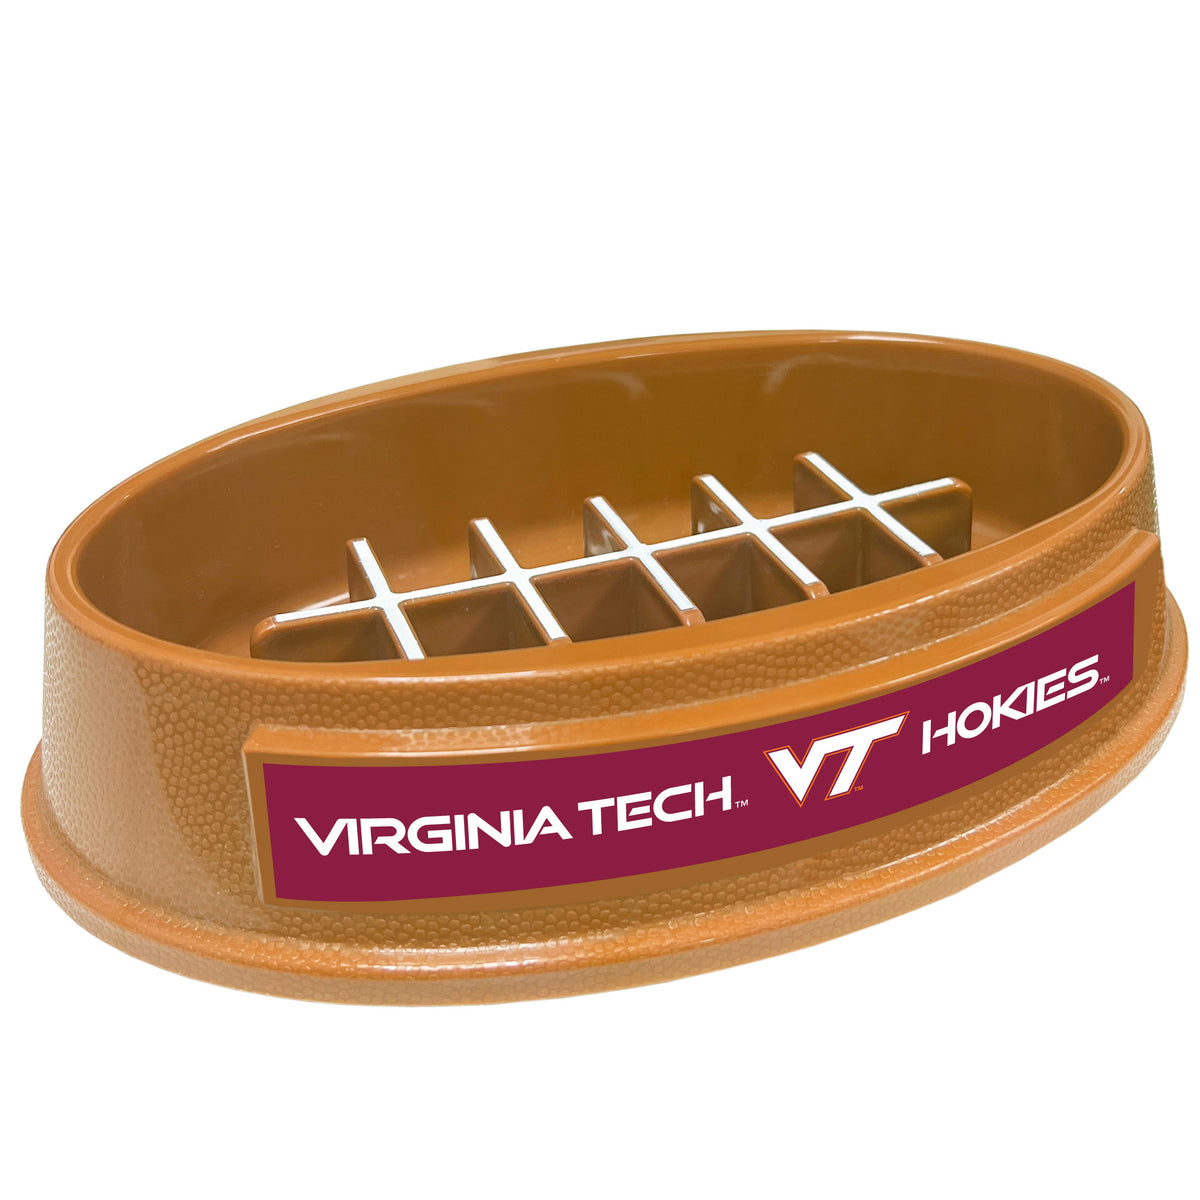 VA Tech Hokies Football Slow Feeder Bowl